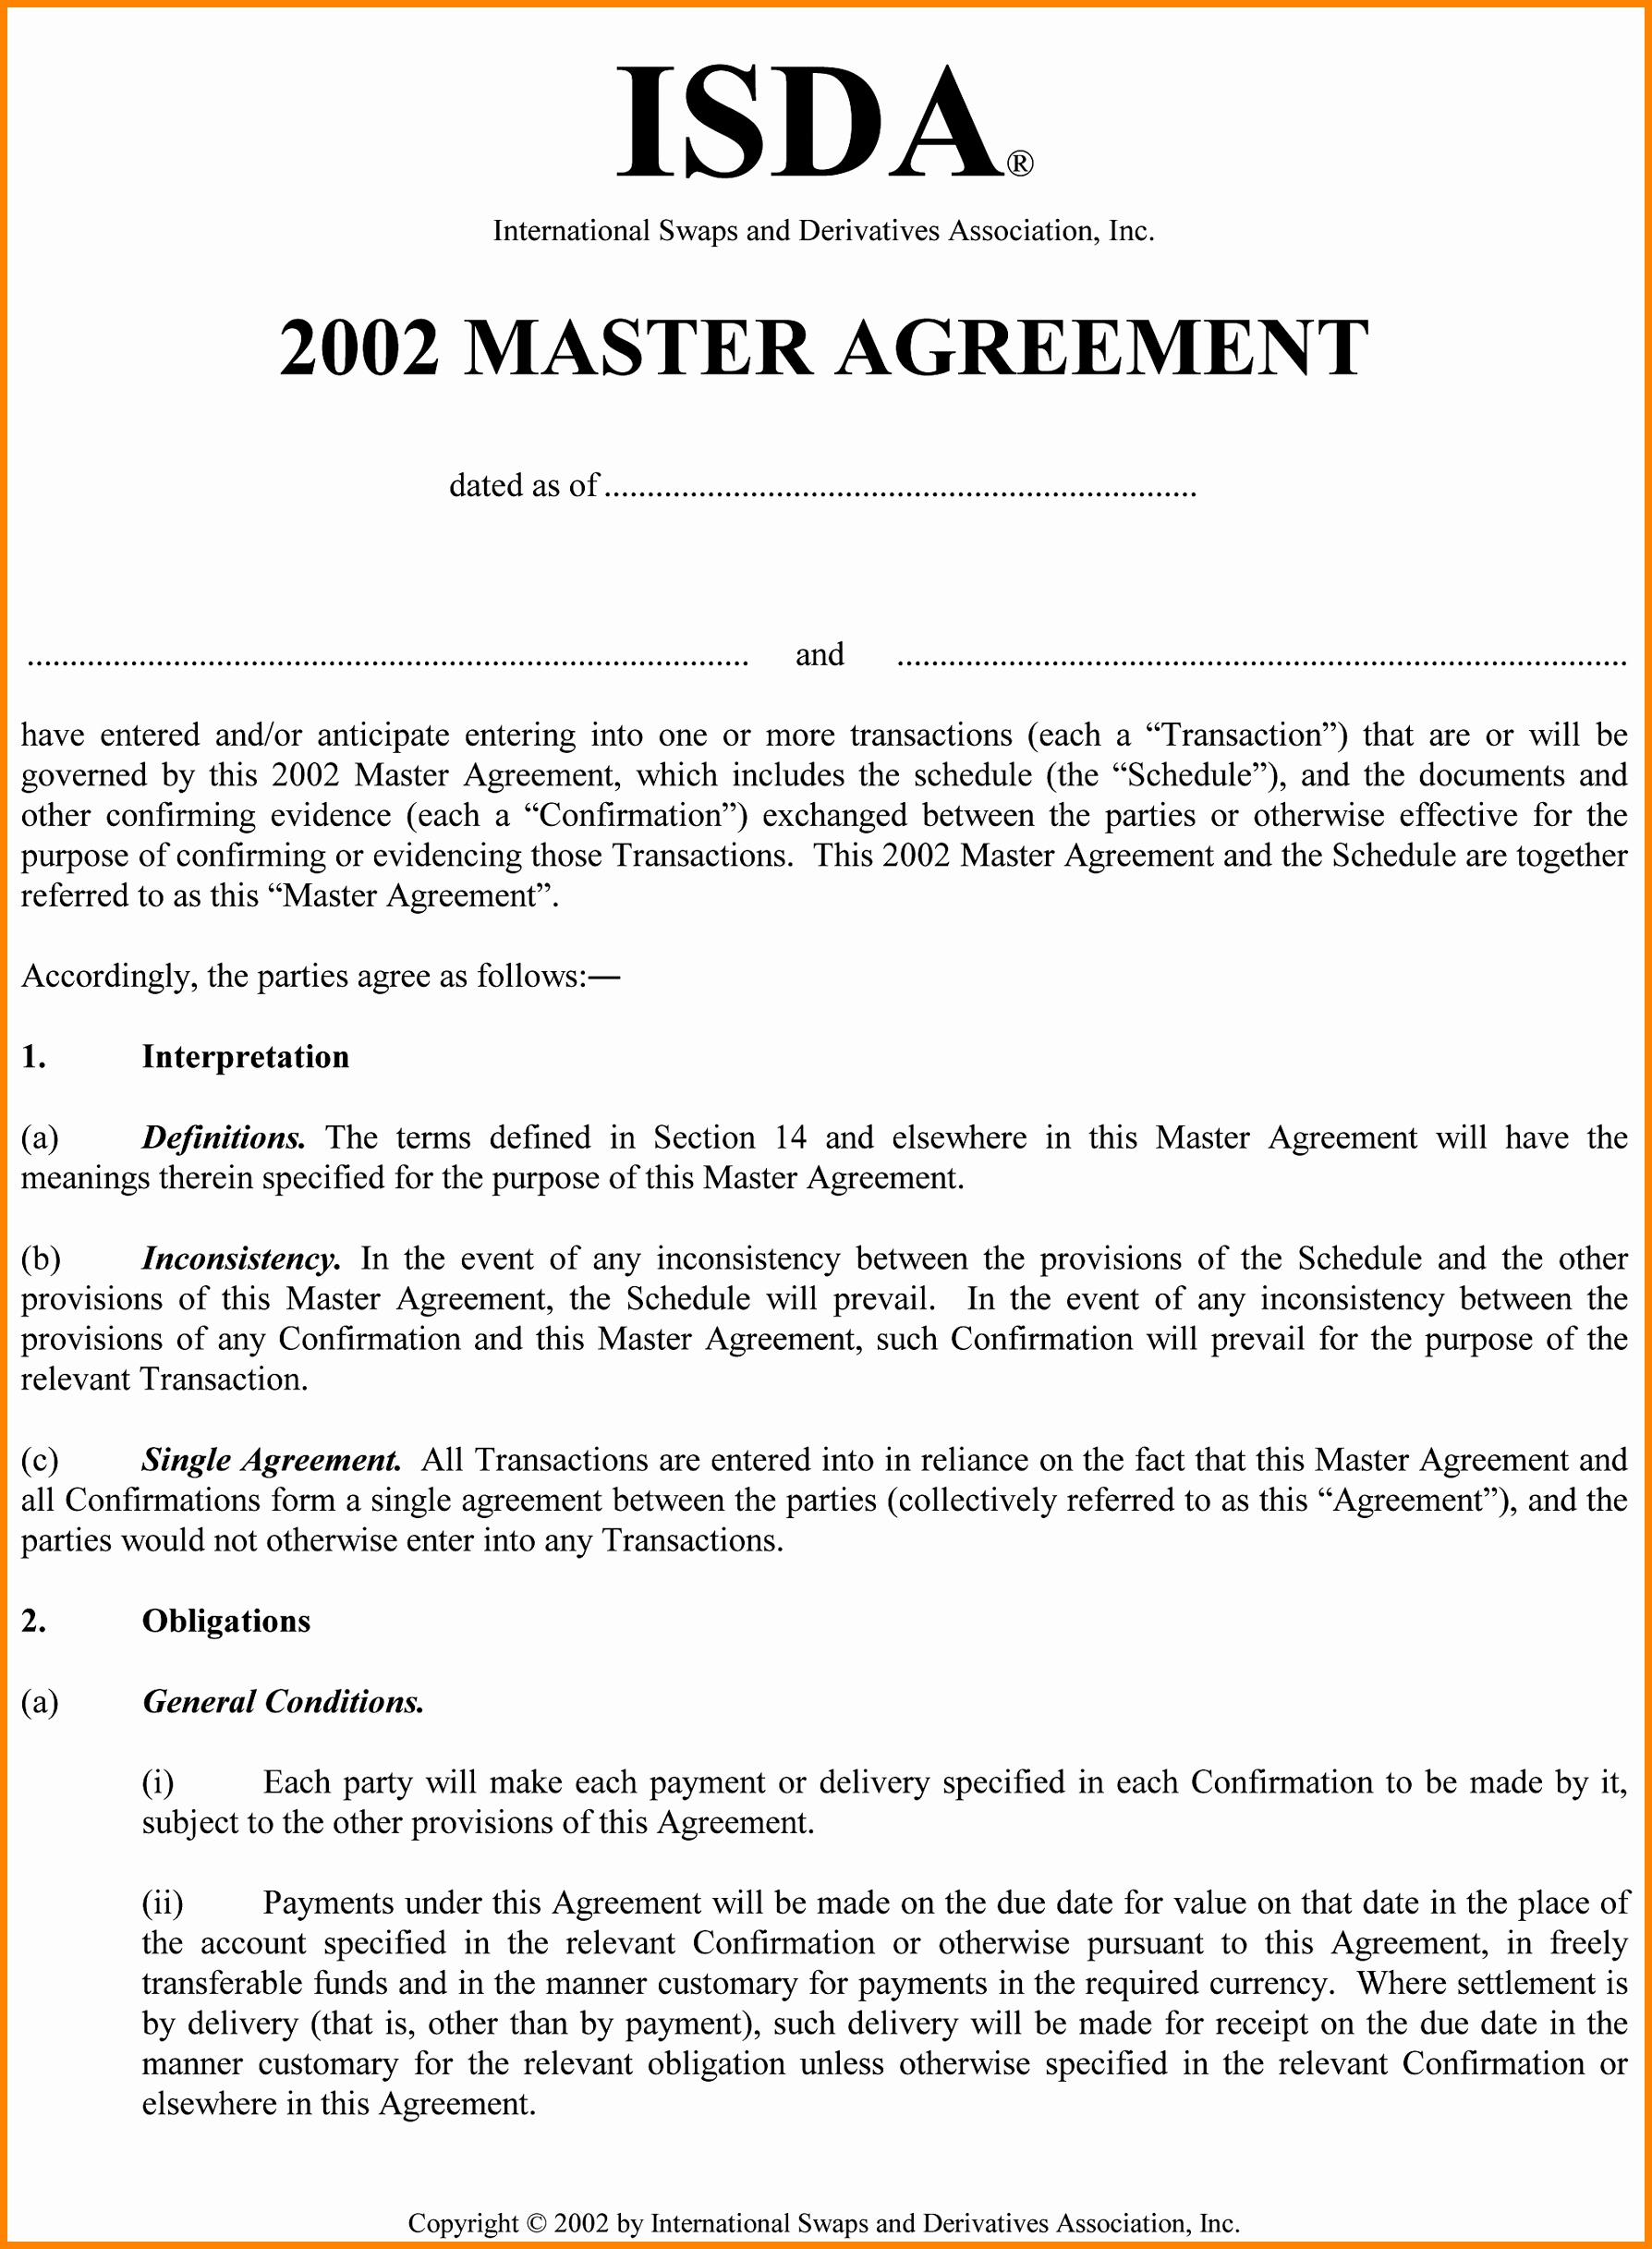 Master Agreement New 4 isda Agreement Sample DOCUMENT IDESIGNS IDEA